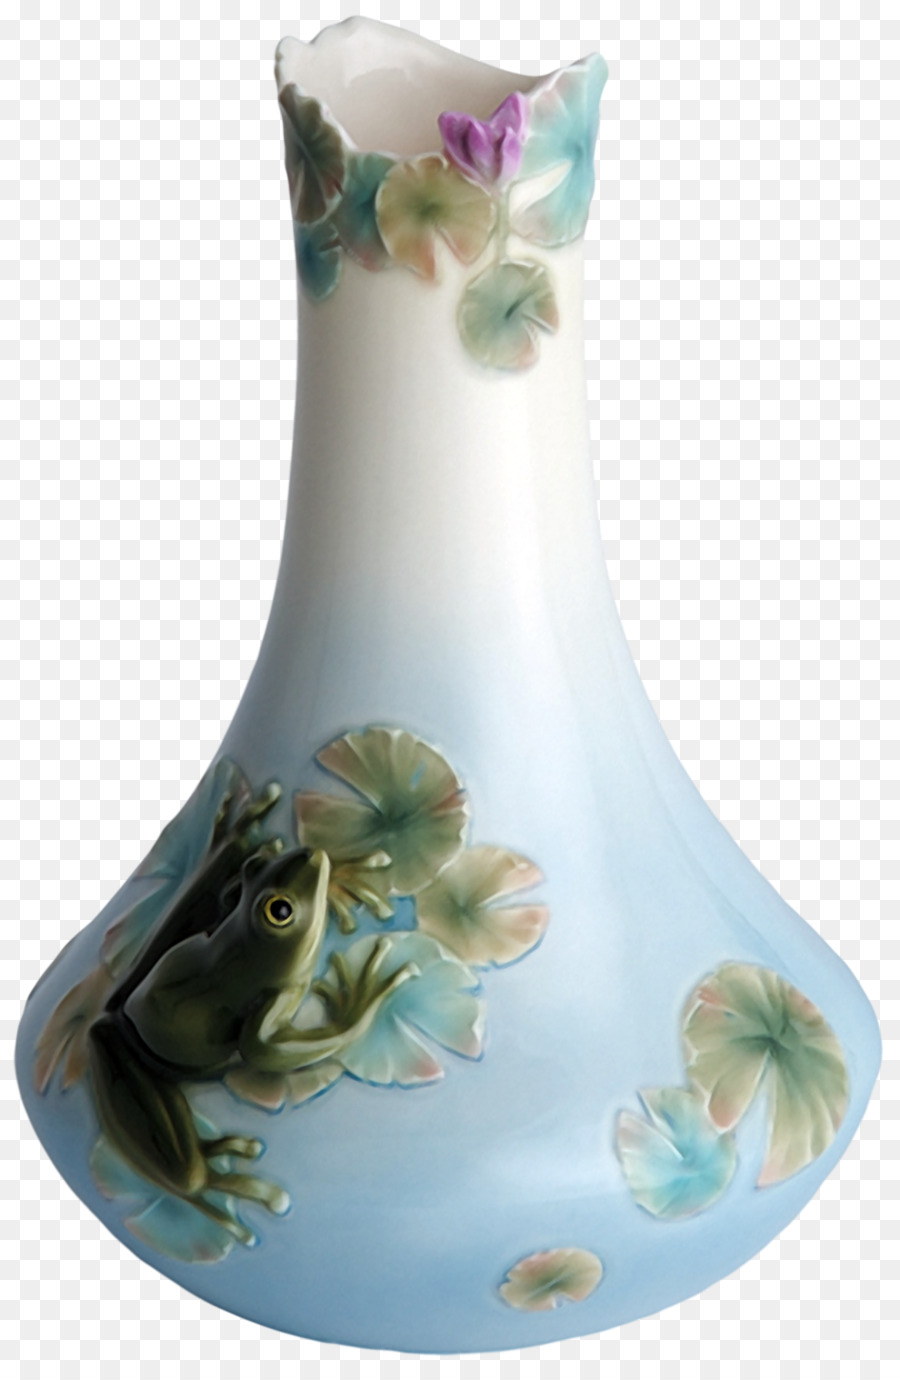 Vase Franz-Porzellane Clip-art - Vase